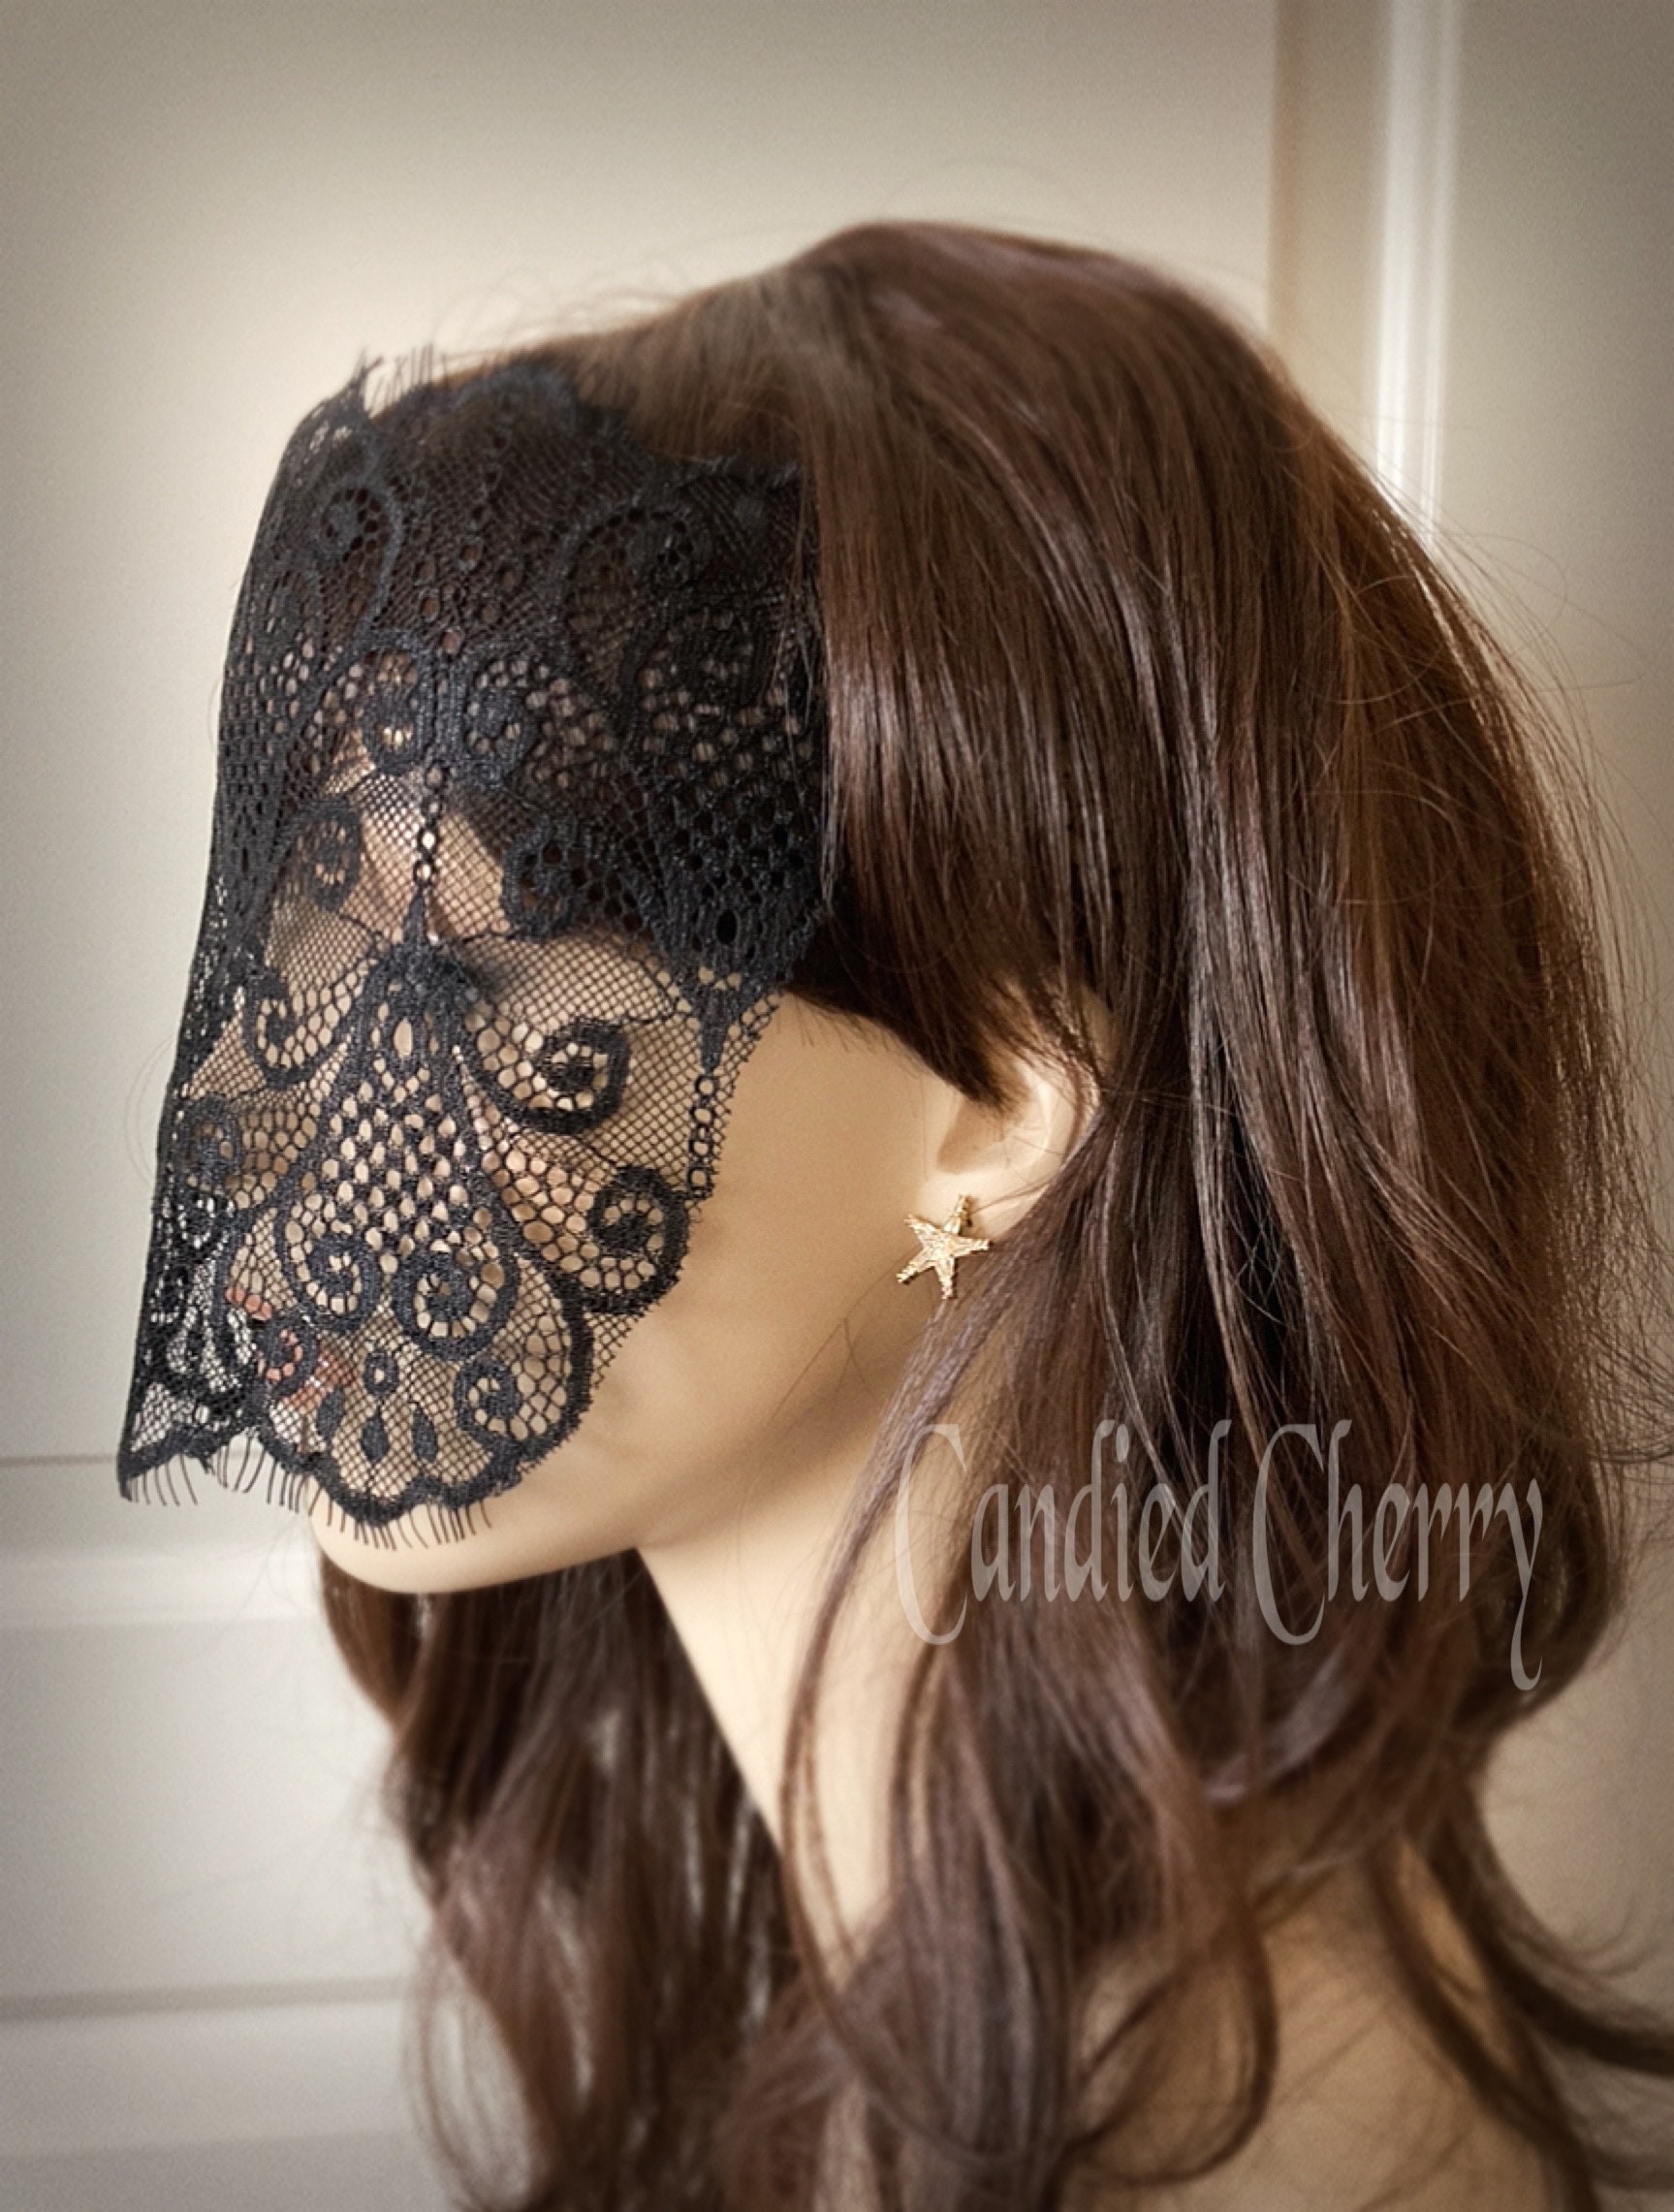 Rayna Alencon Lace Blindfold Venetian Eye Mask in Ivory or Black -  ShopperBoard